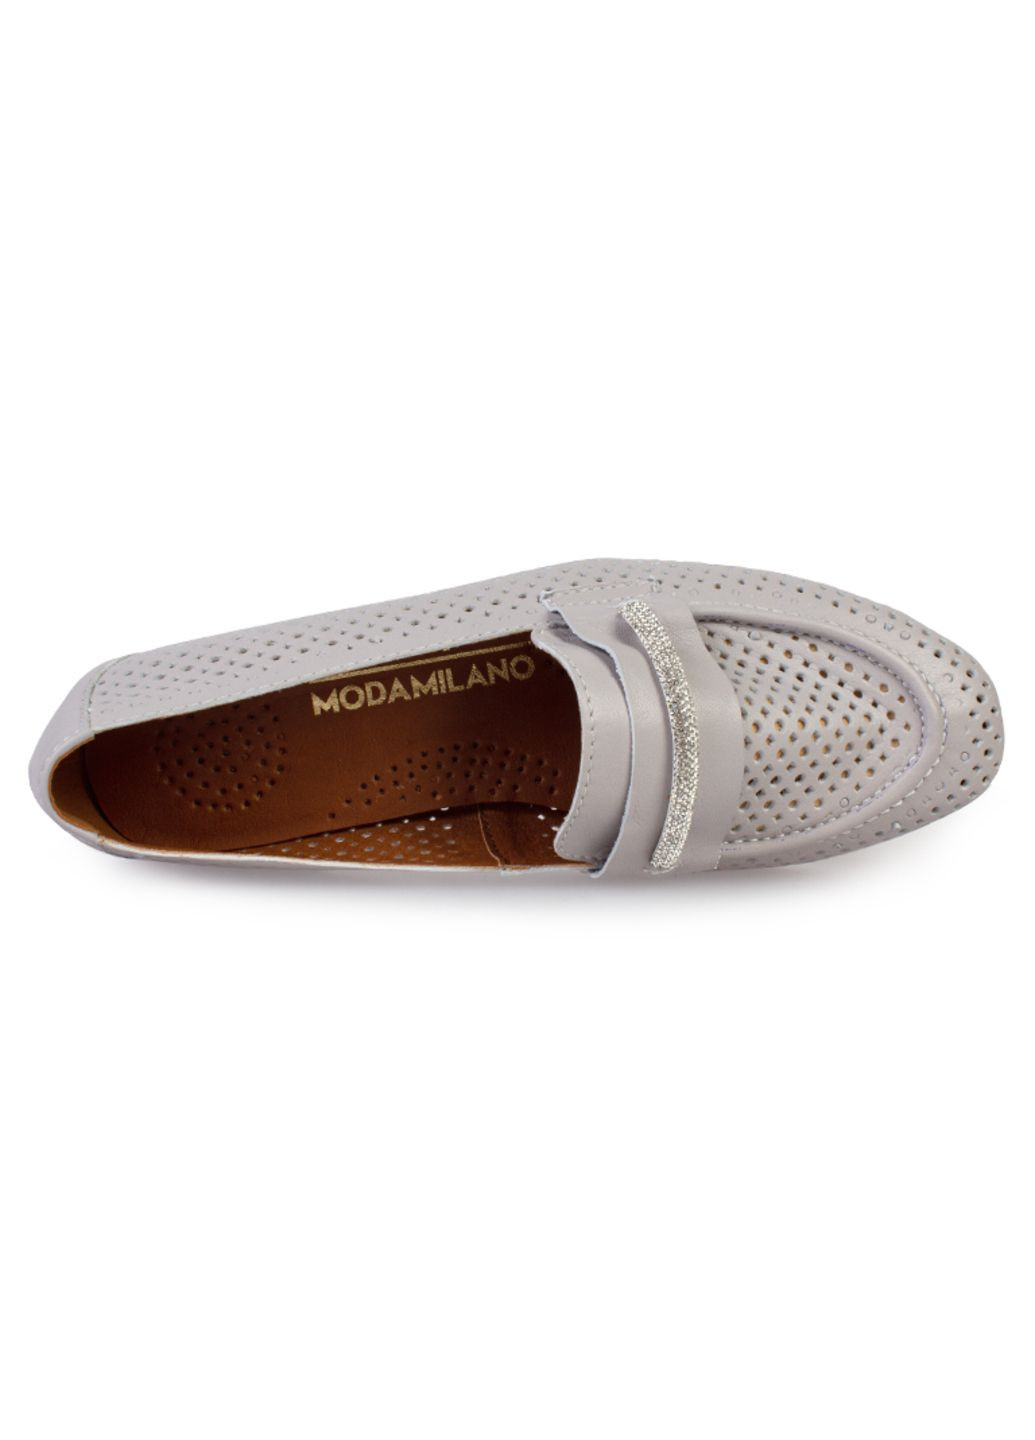 Туфли лоферы женские бренда 8200505_(1) ModaMilano на среднем каблуке